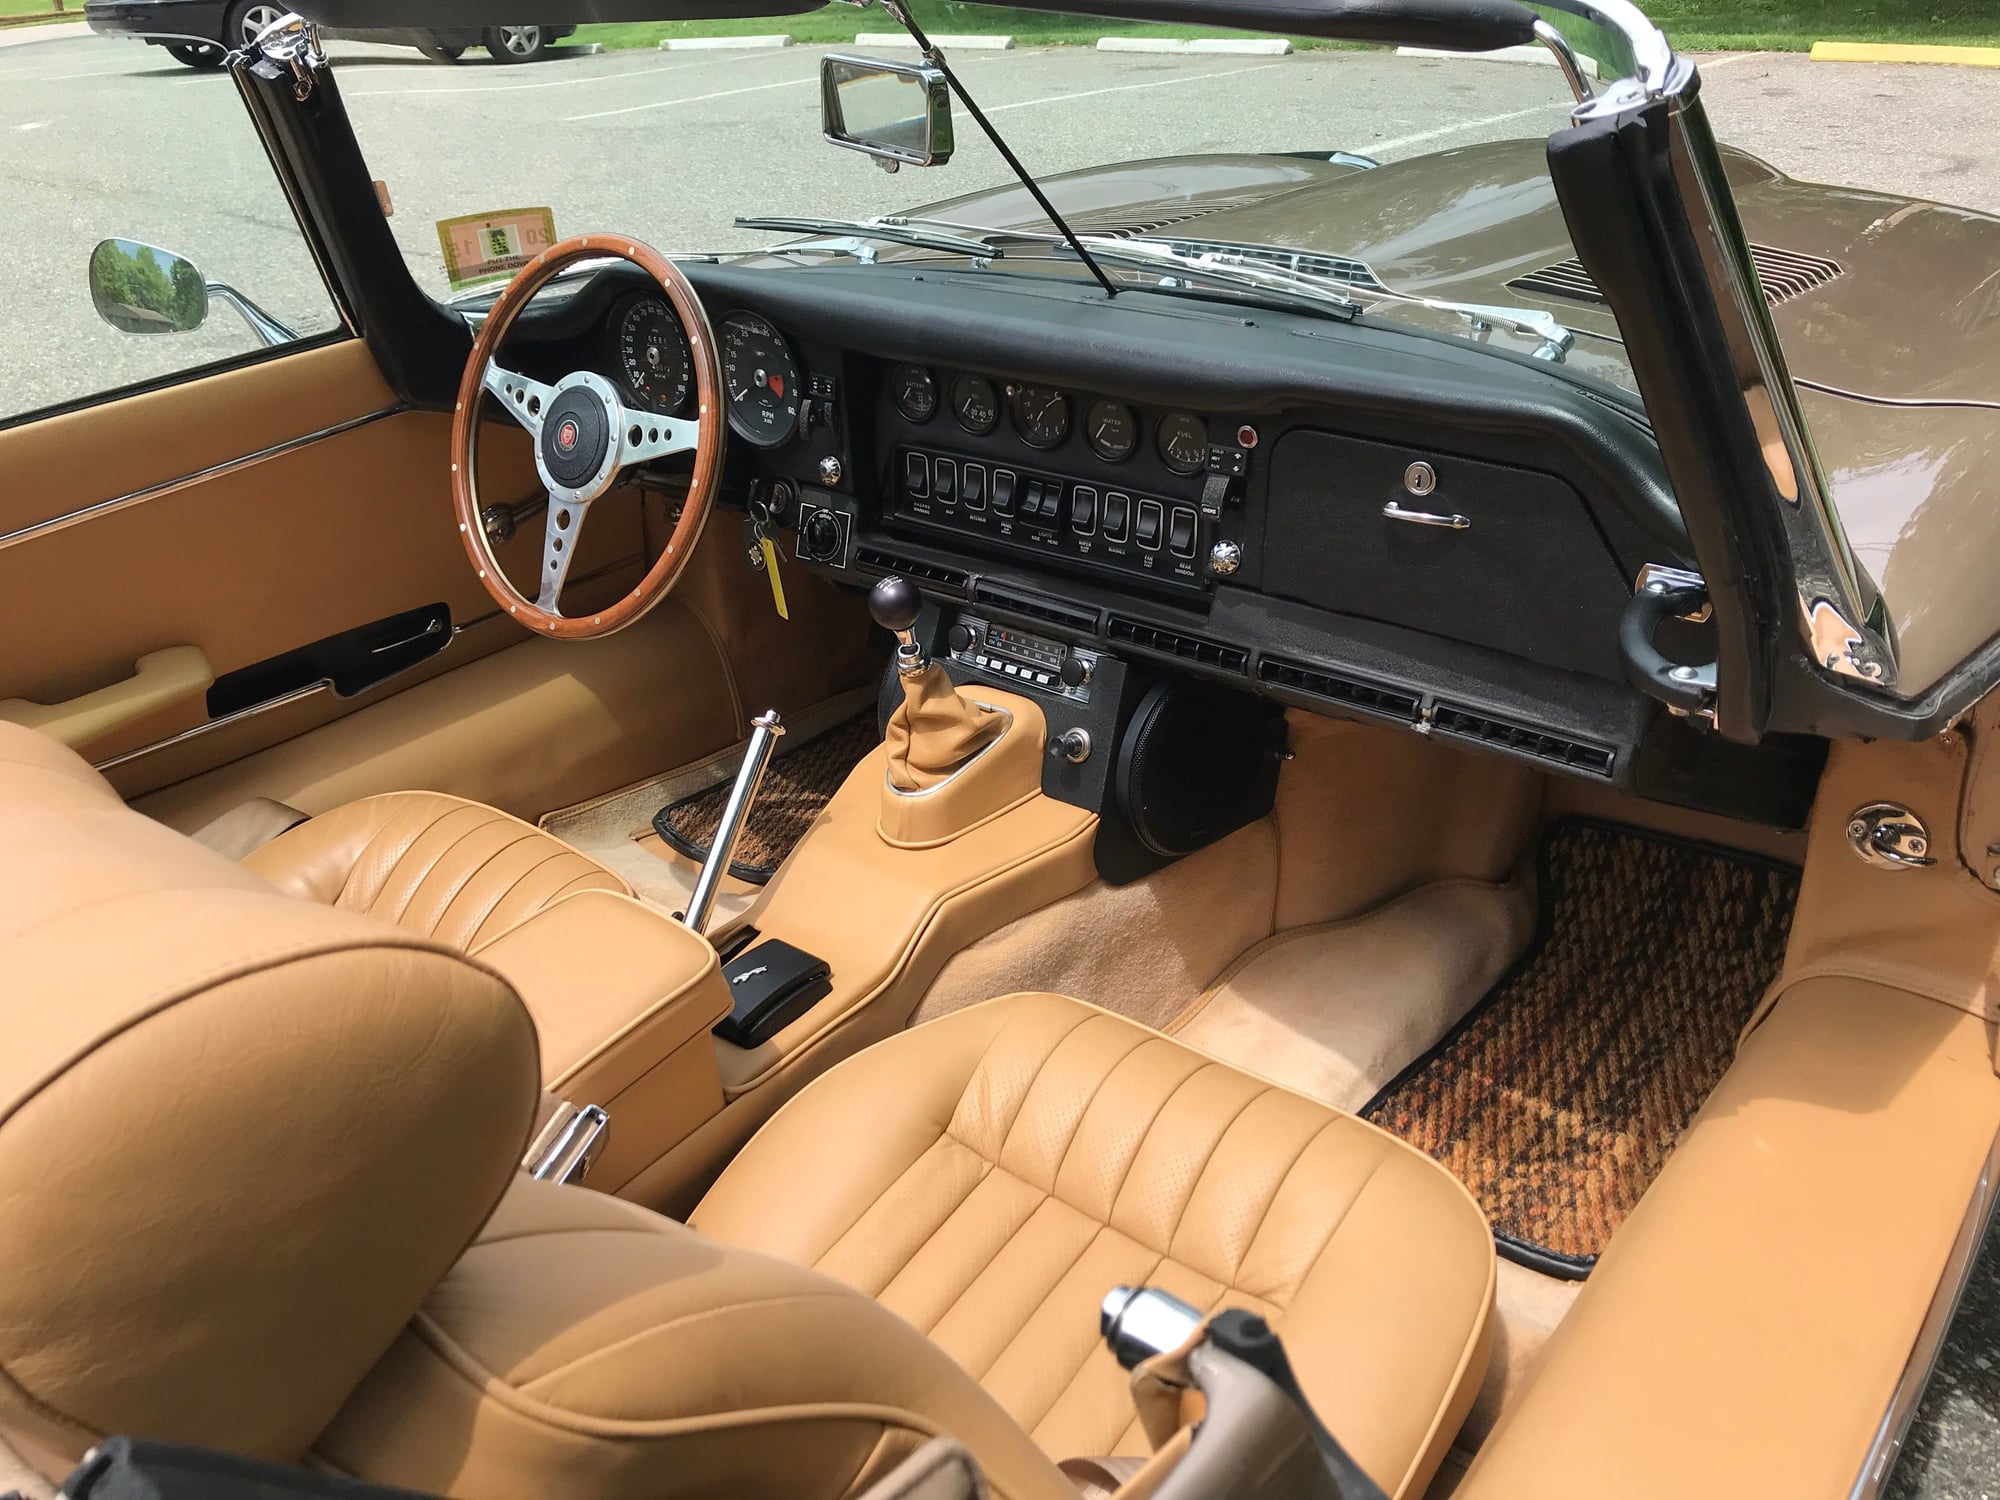 1971 Jaguar XKE - 1971 Jaguar XKE Series II OTS FULL ROTISSERIE BARE METAL COST IS NO OBJECT RESTO - Used - VIN SJV12345678910123 - 6 cyl - 2WD - Manual - Convertible - Gold - Central Nj, NJ 08822, United States